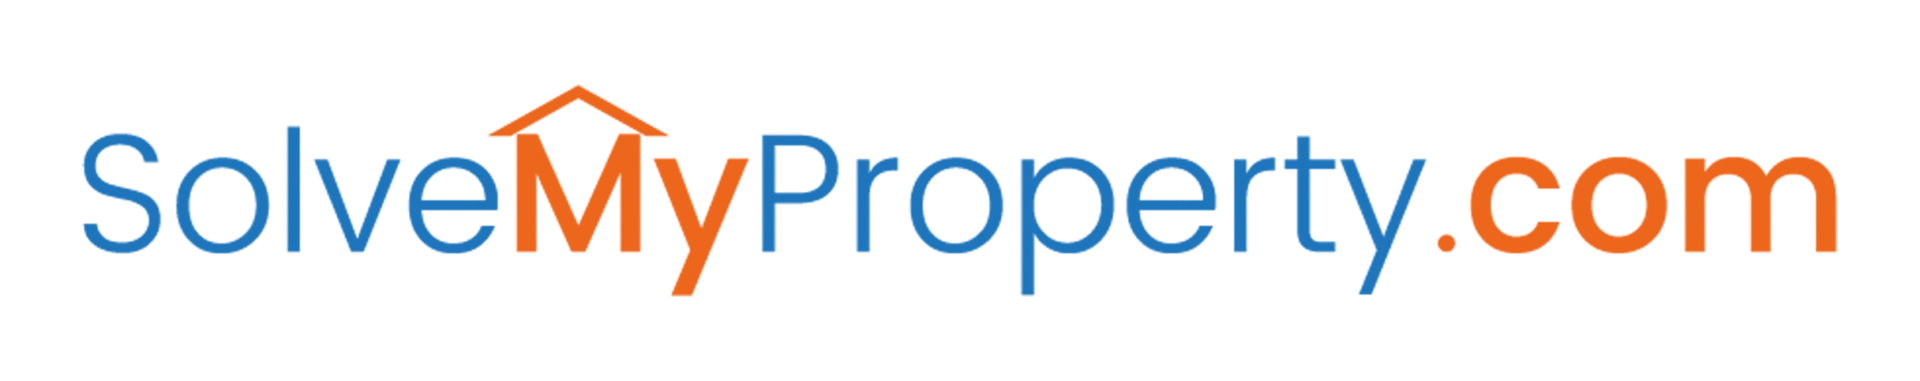 SolveMyProperty.com  logo